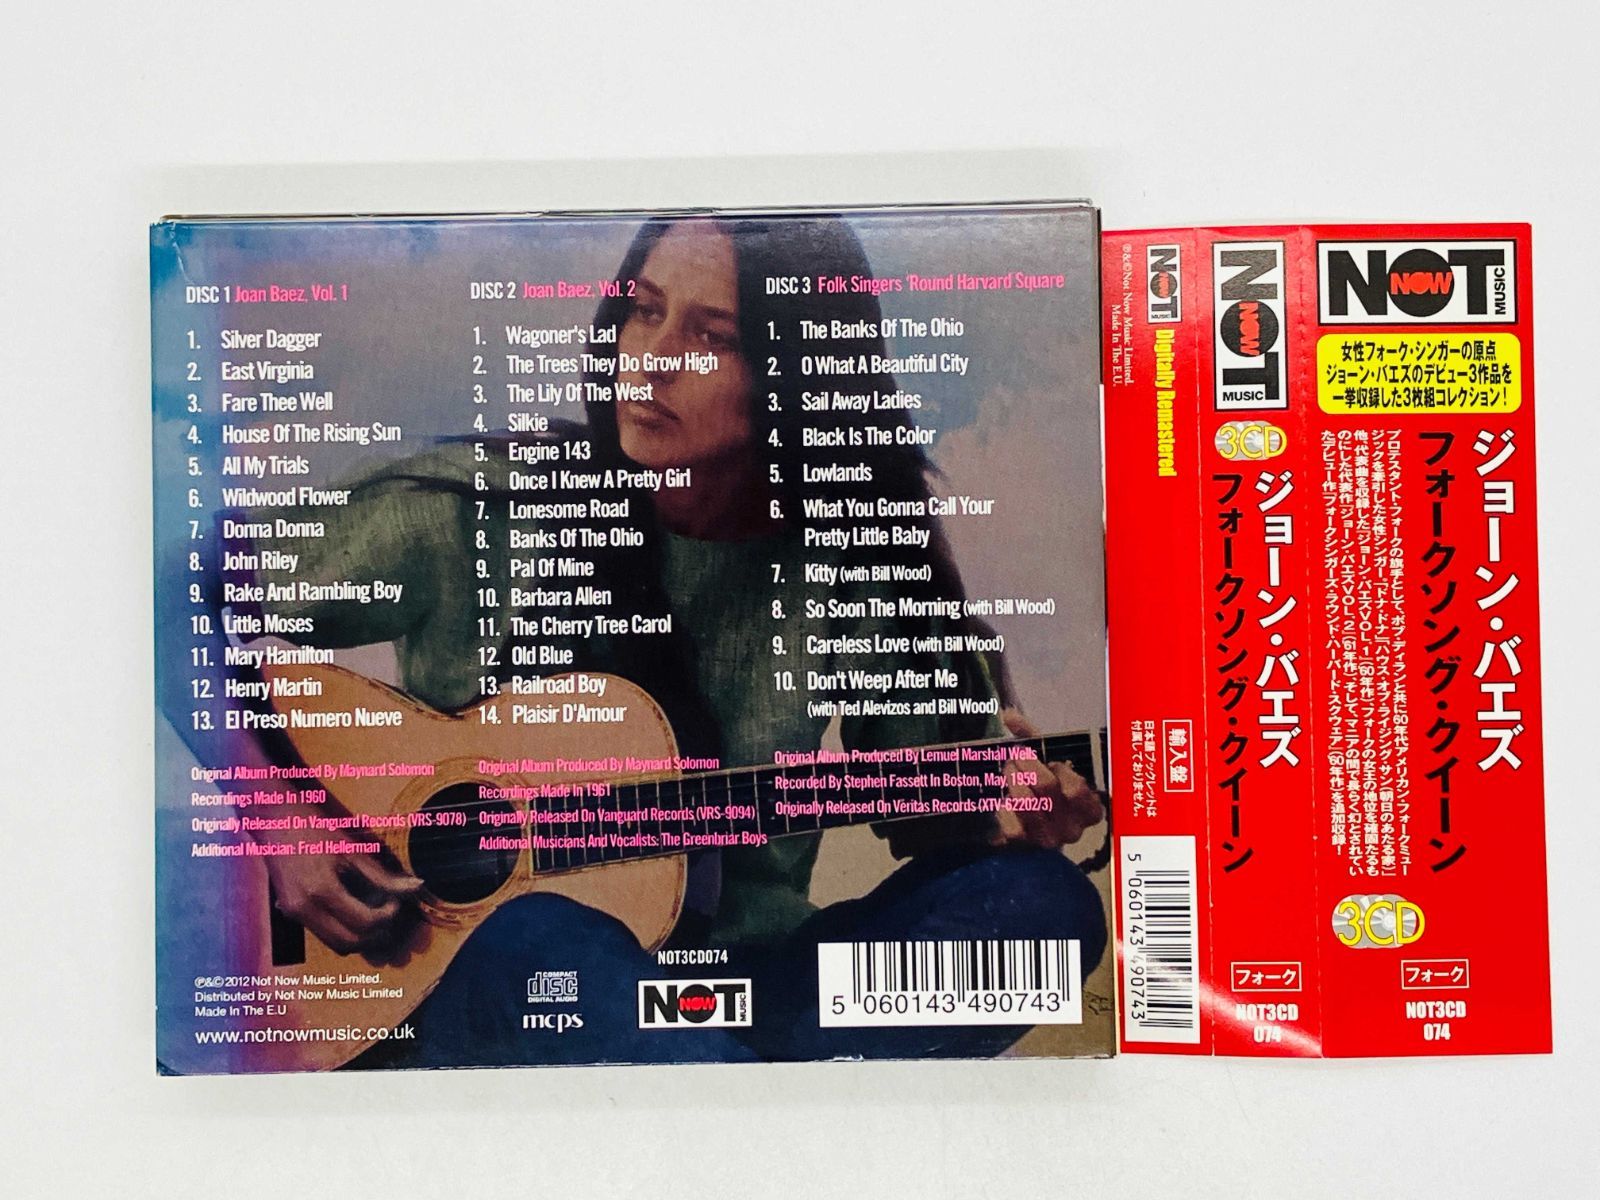 3CD ジョーン・バエズ / フォークソング・クィーン ベスト・アルバム Joan Baez / Trilogy 帯付き Y12 - メルカリ